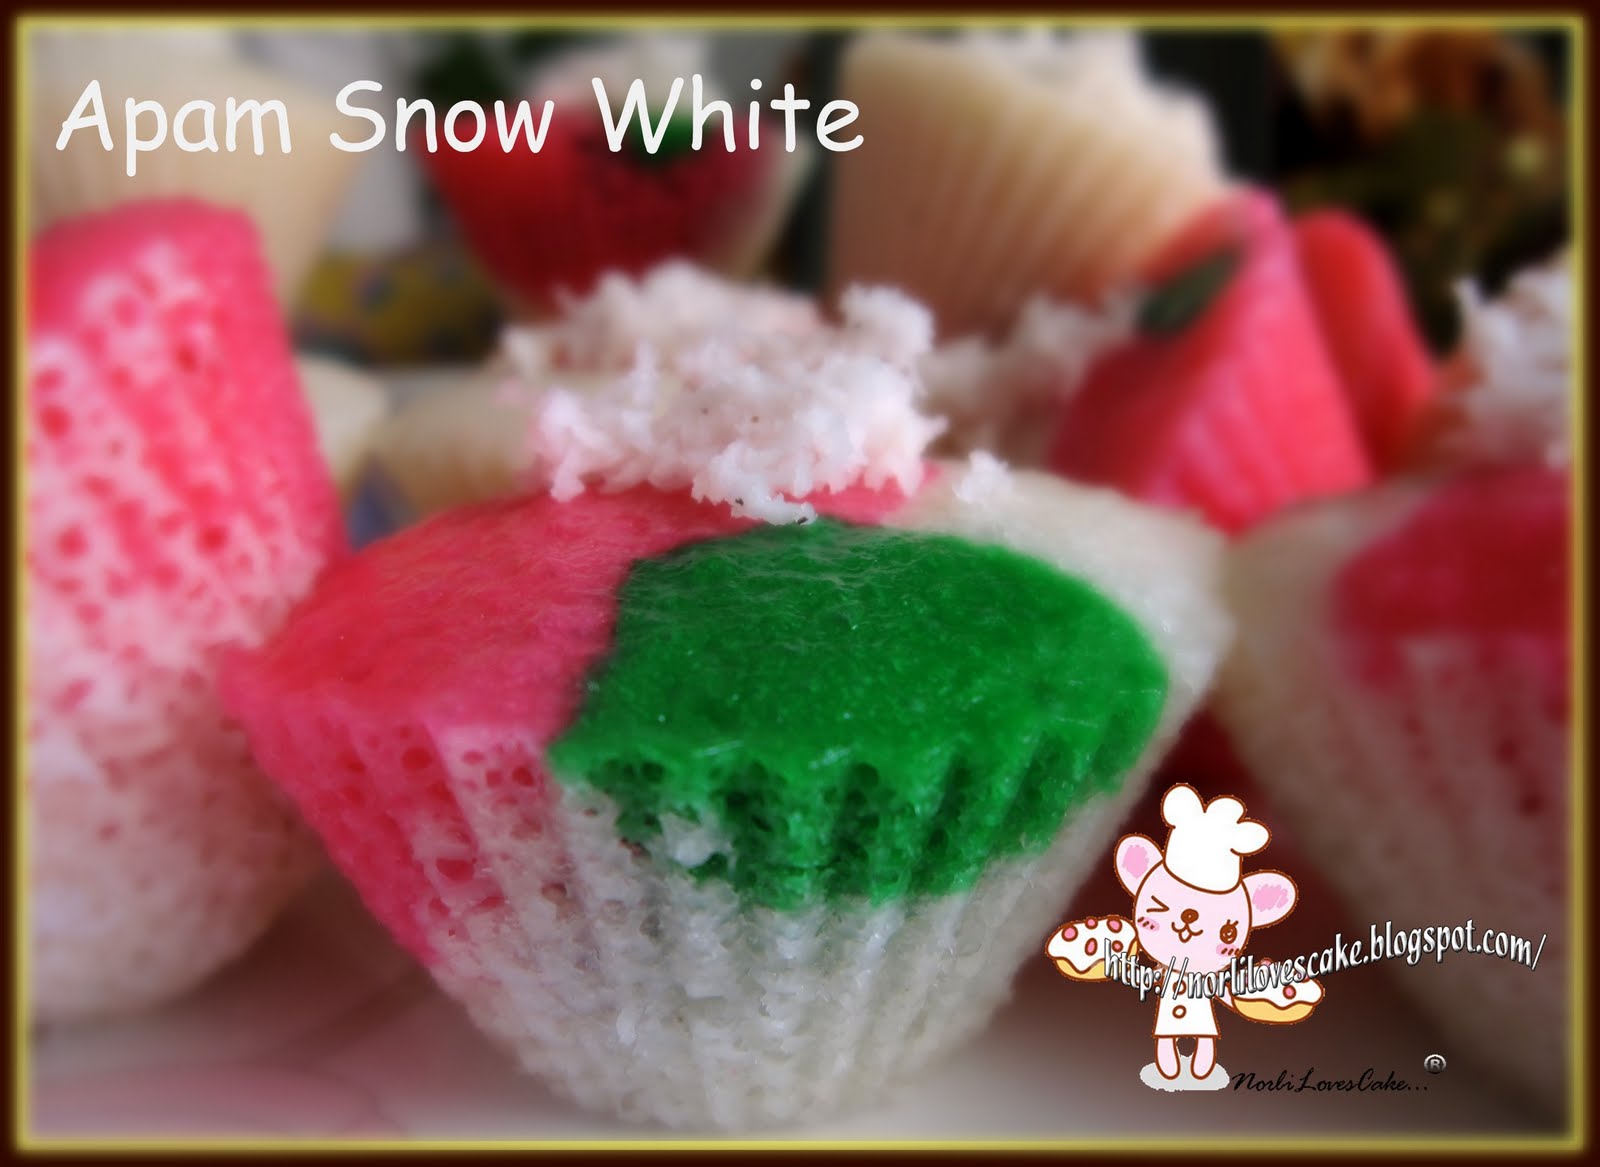 Norli Loves Cake : .: Apam Snow White